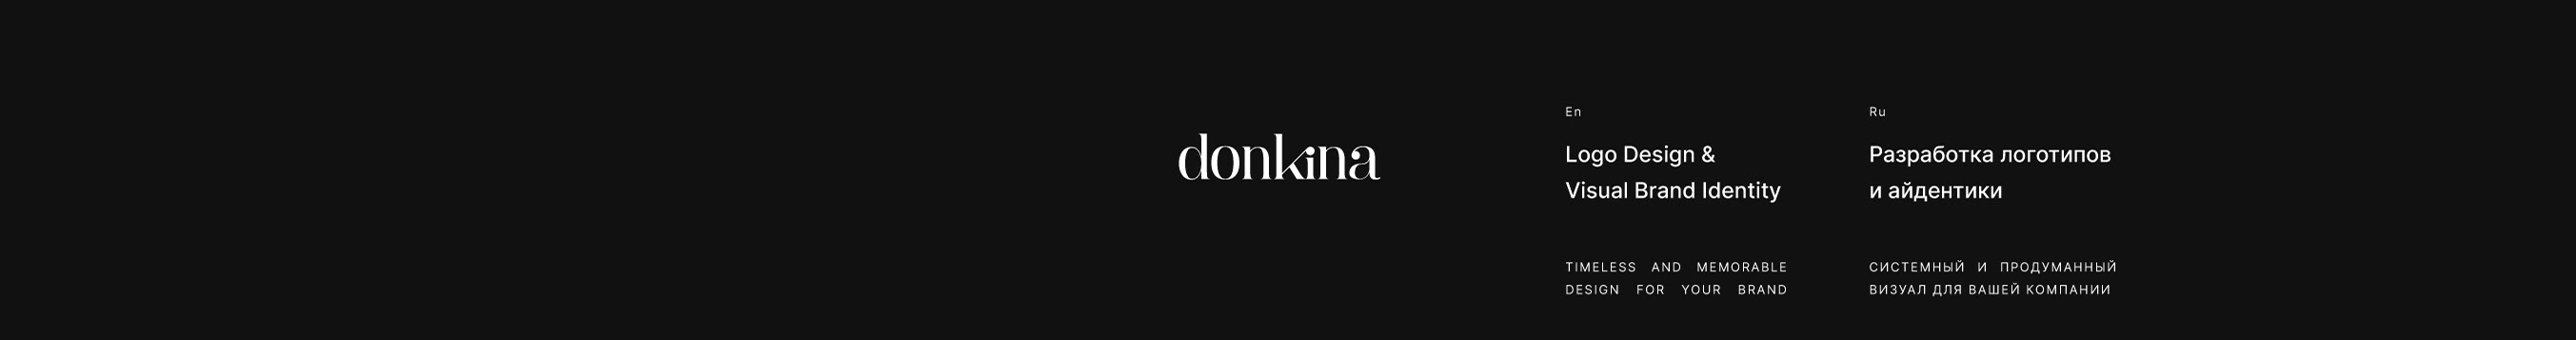 Olga Donkina profil başlığı